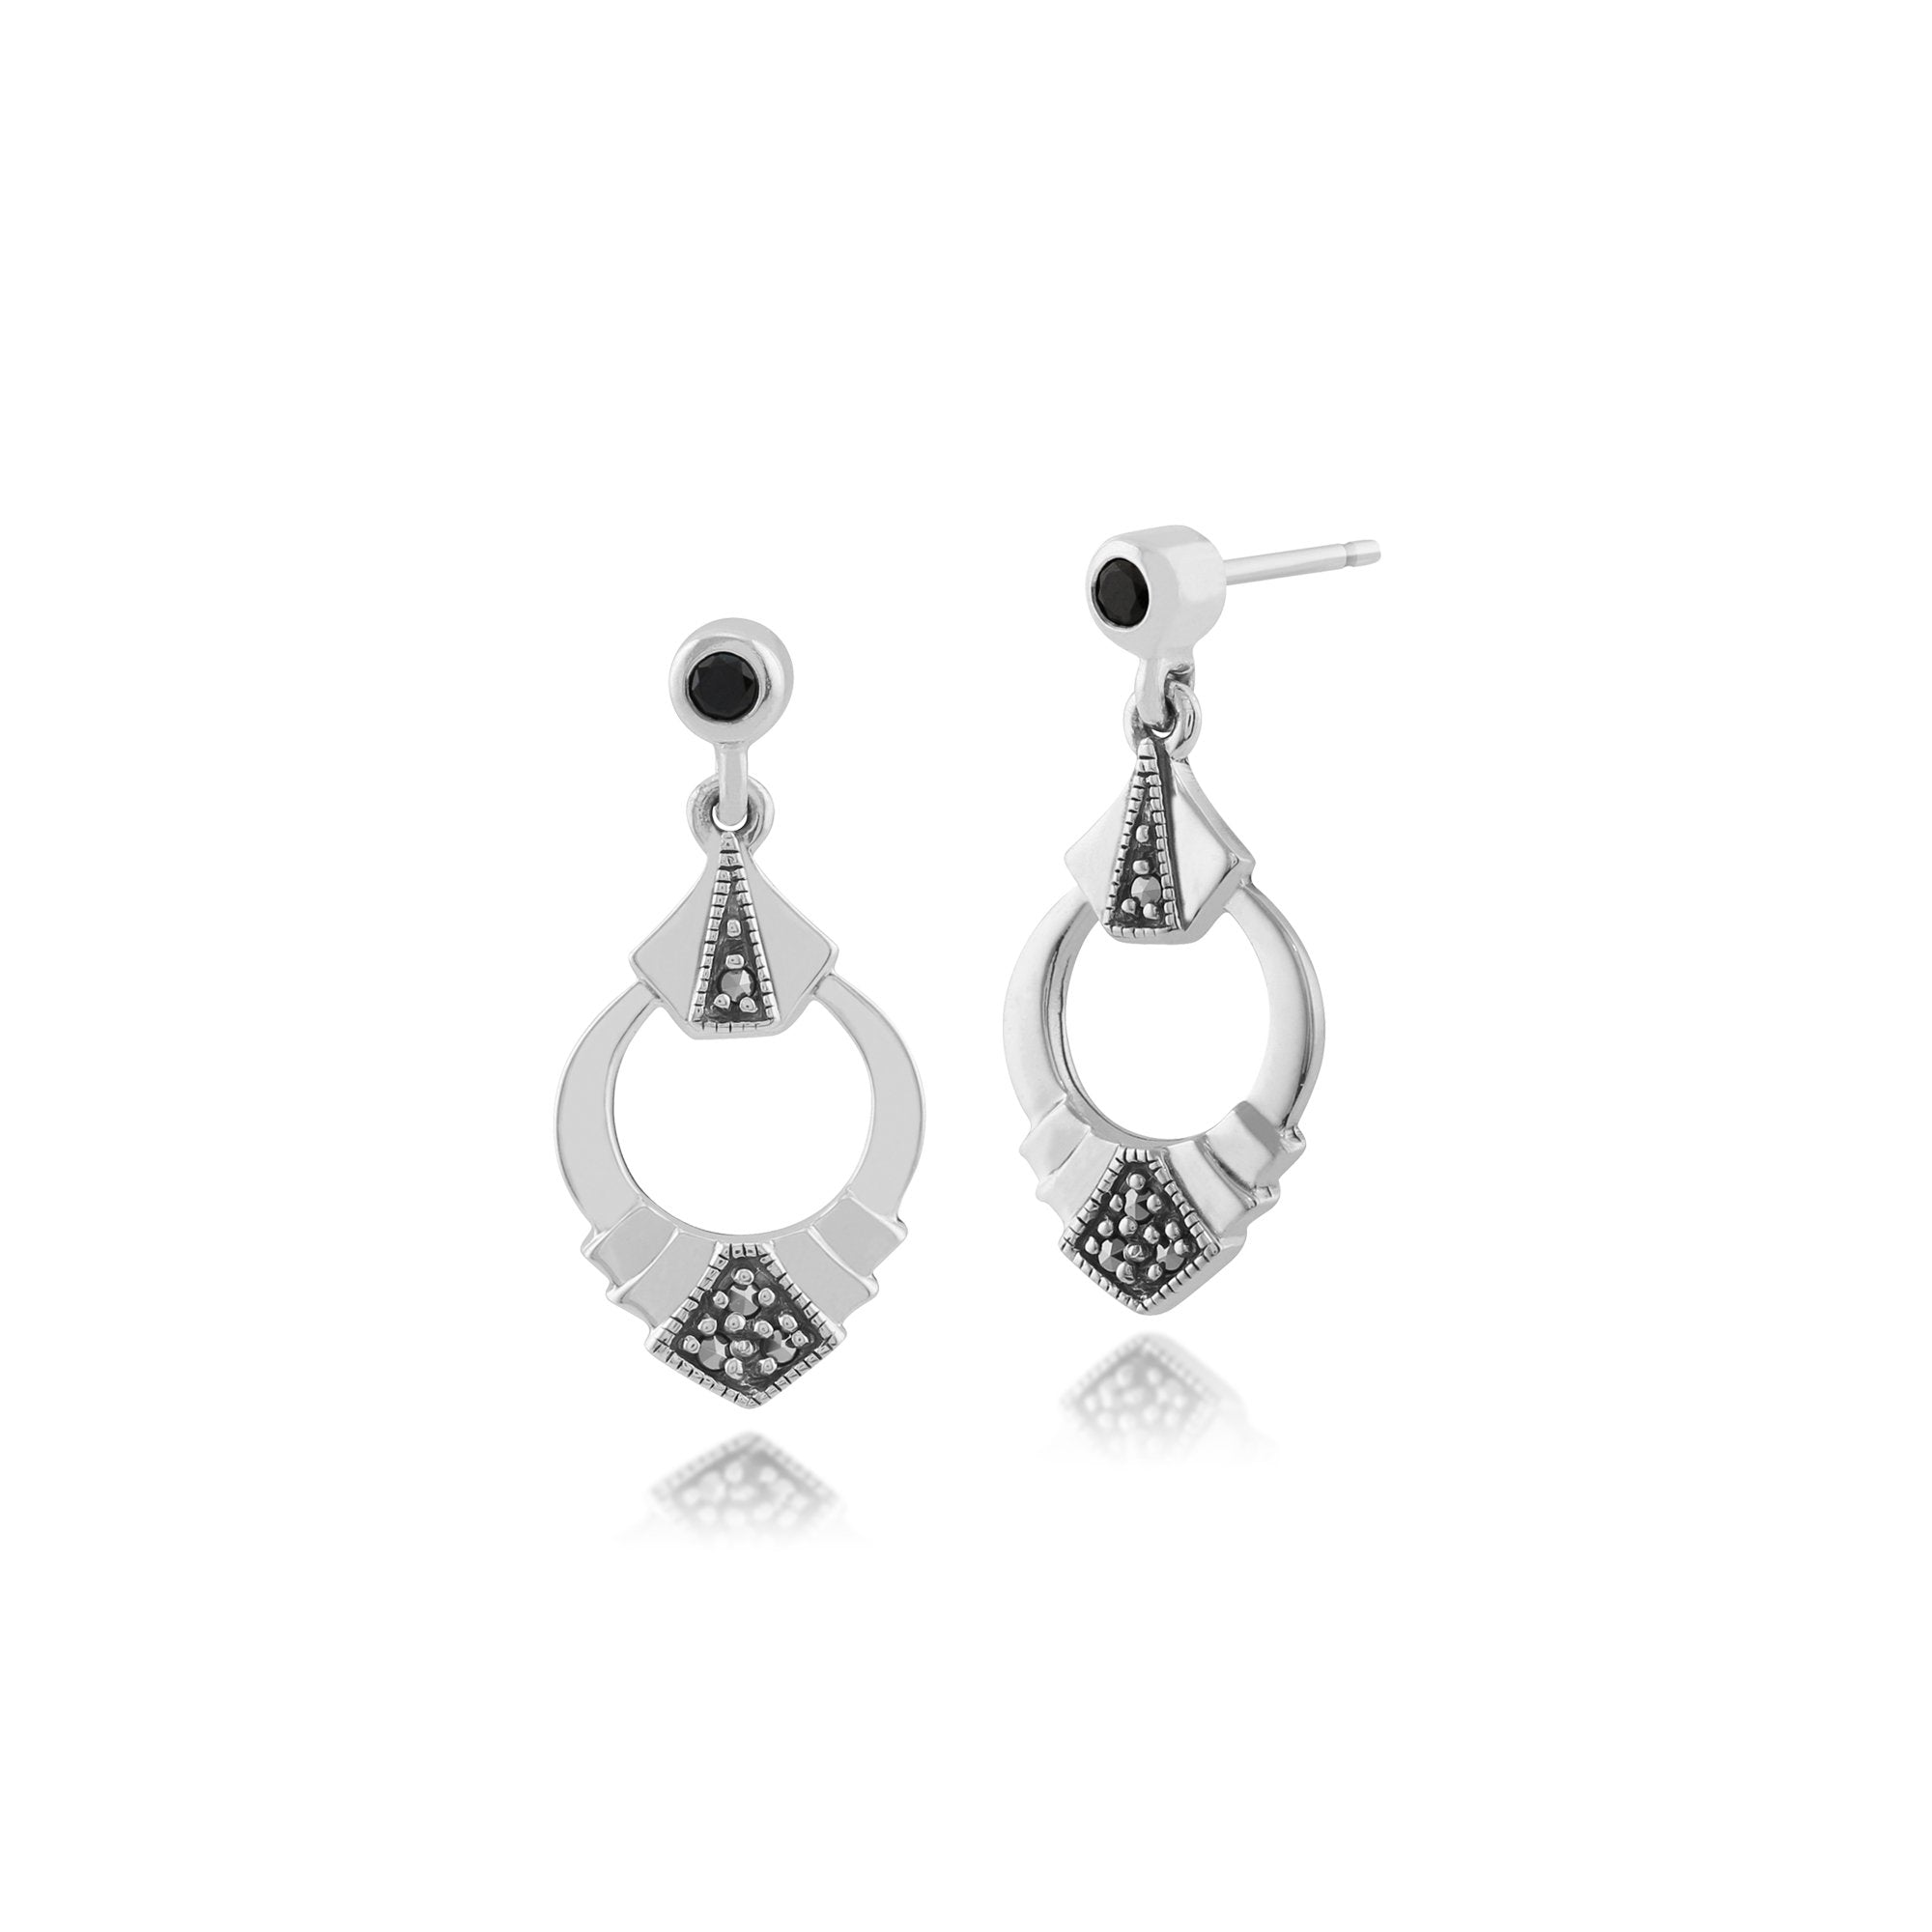 Art Deco Style Black Spinel & Marcasite Ring Drop Earrings in 925 Sterling Silver